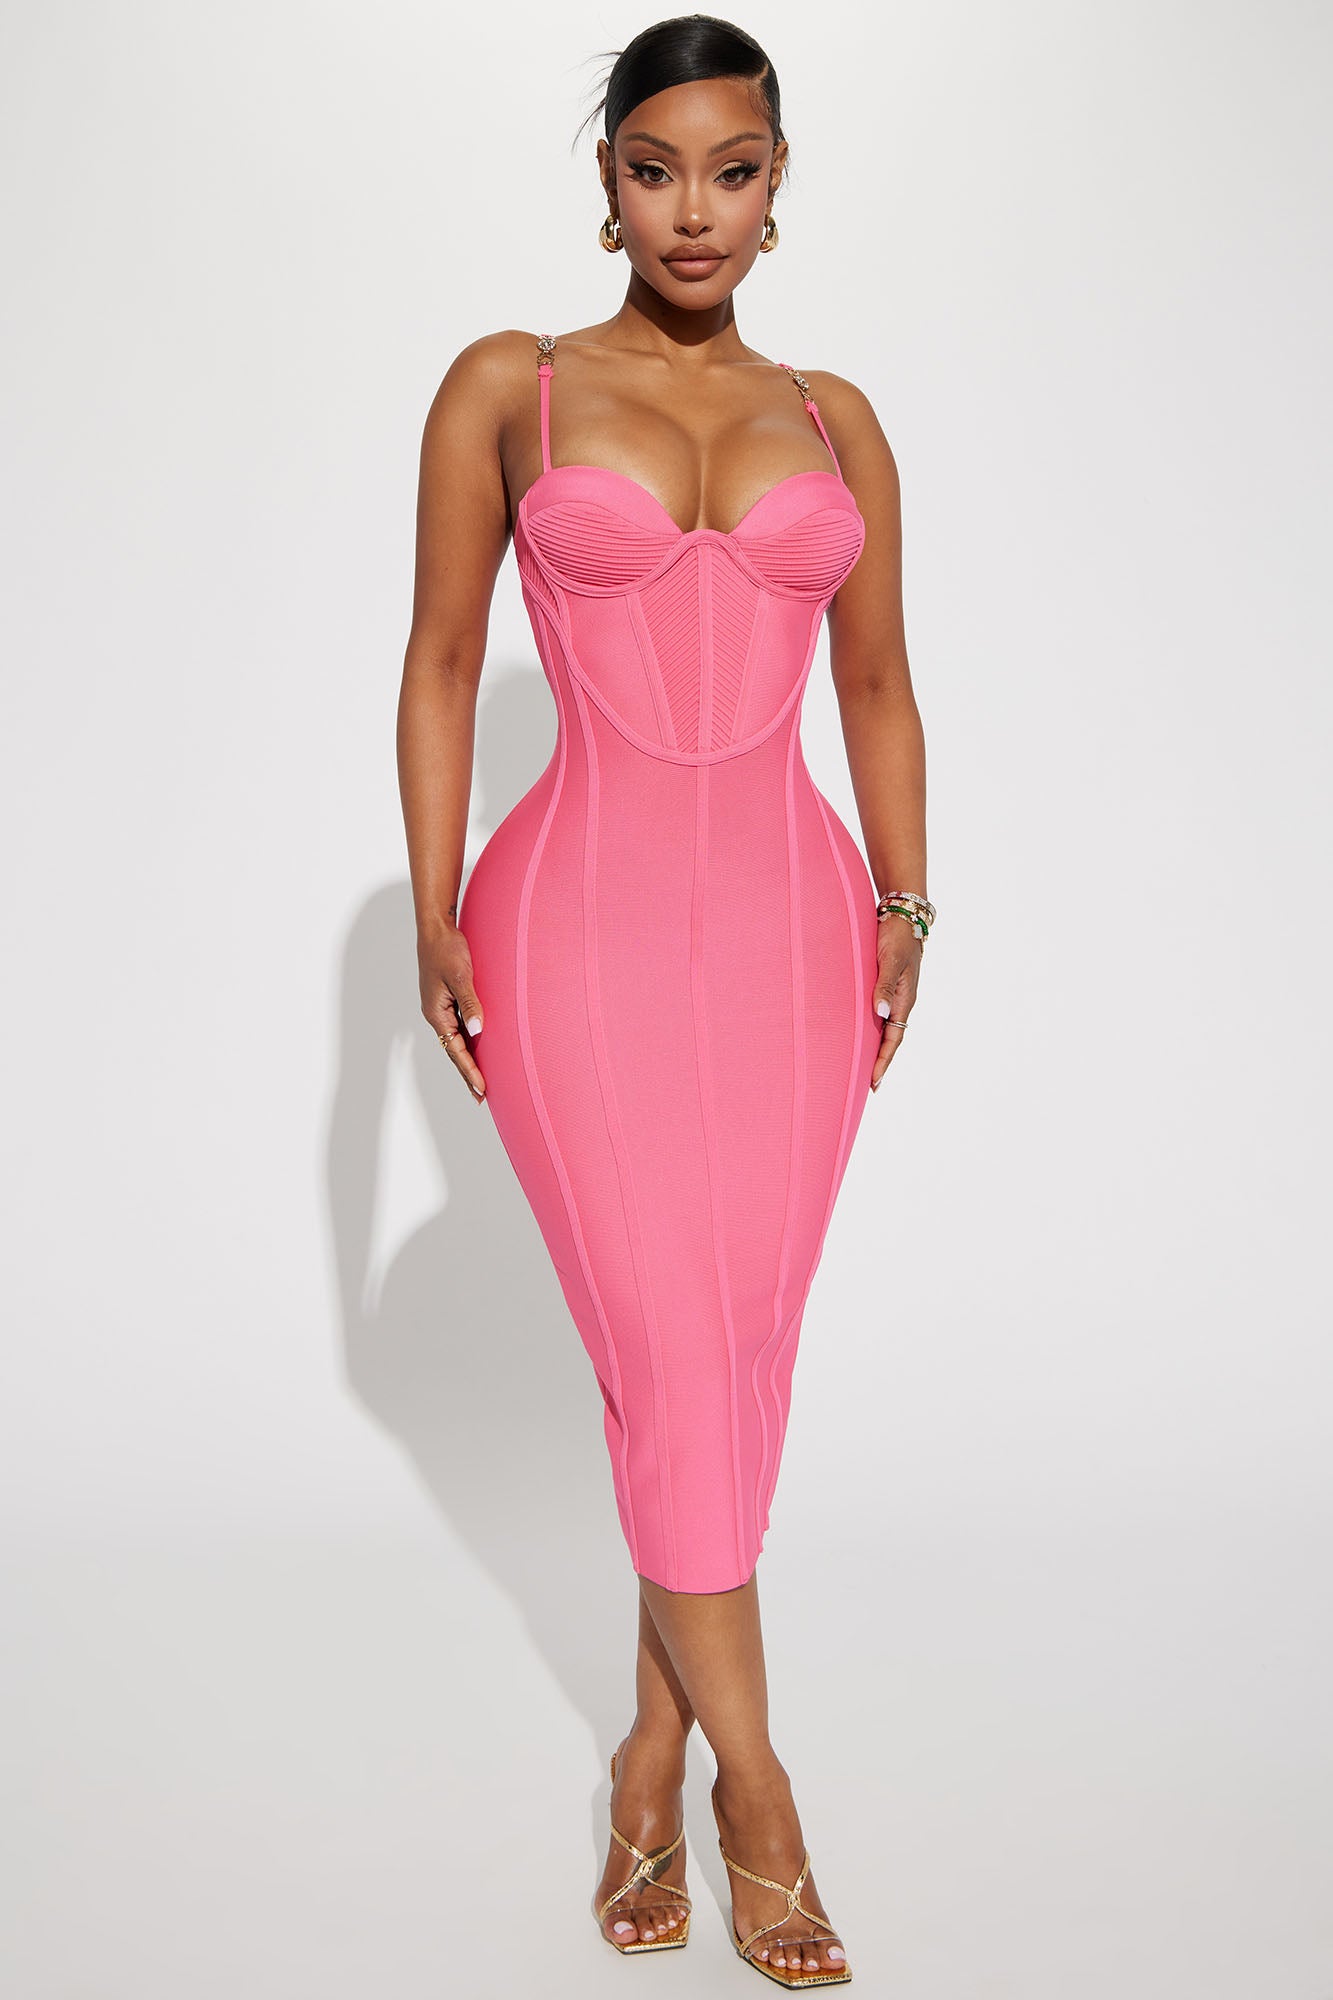 fashion nova pink dress